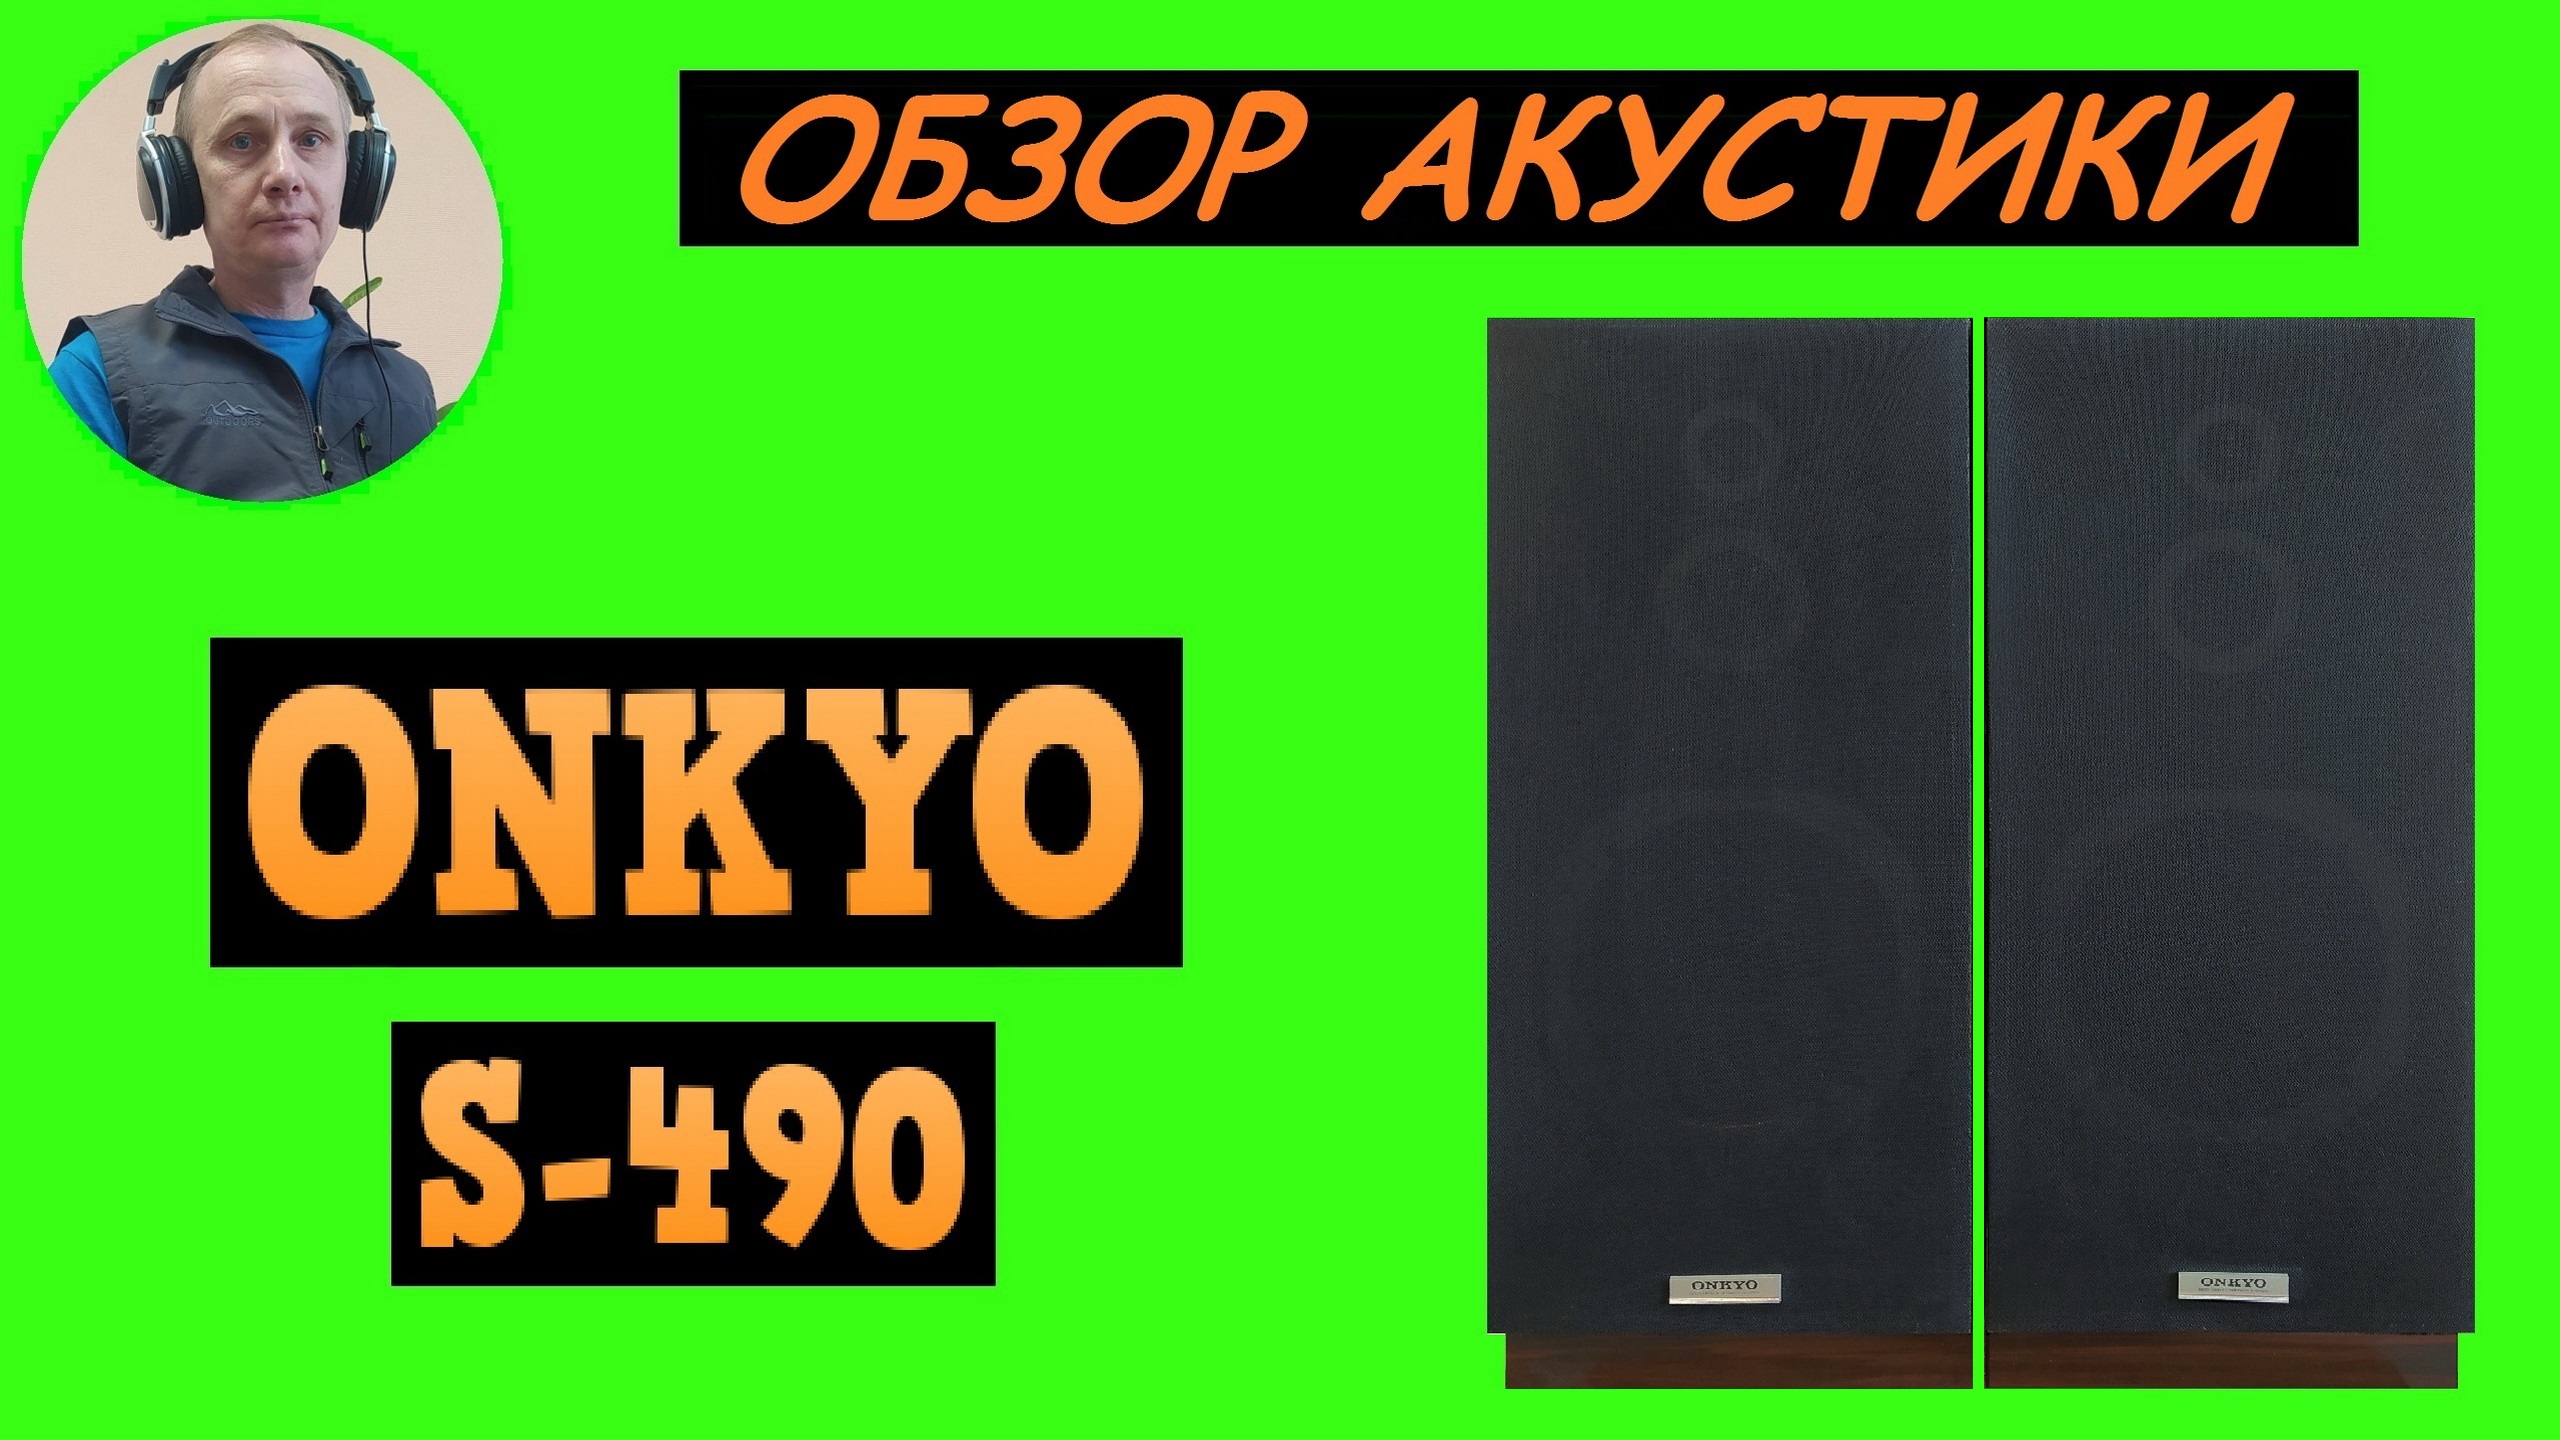 Обзор акустики ONKYO S-490